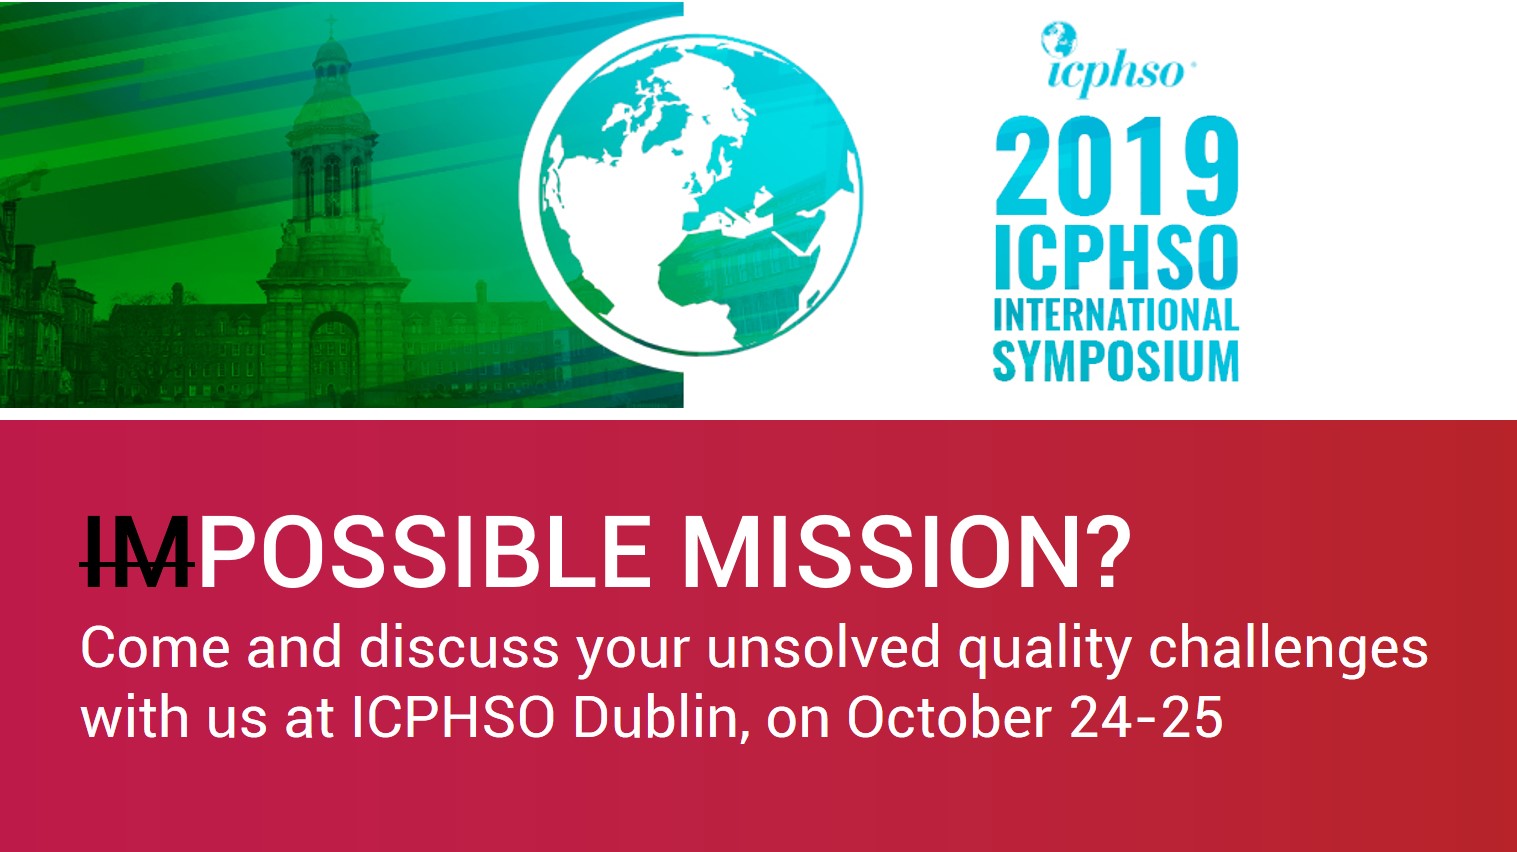 Come and visit us at ICPHSO International Symposium!